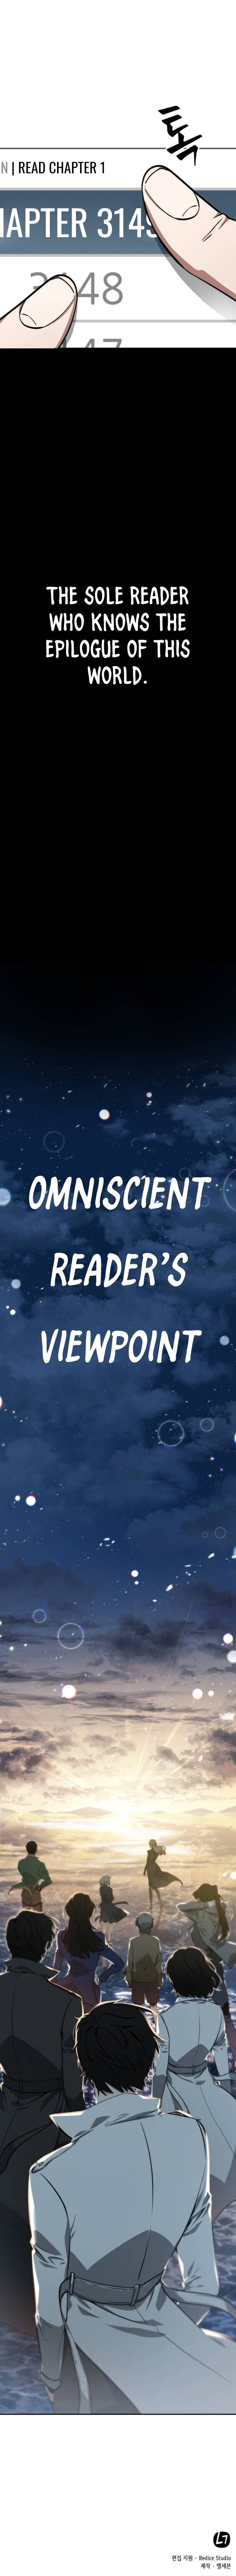 Omniscient Reader's View Manga Manga Chapter - 0 - image 7